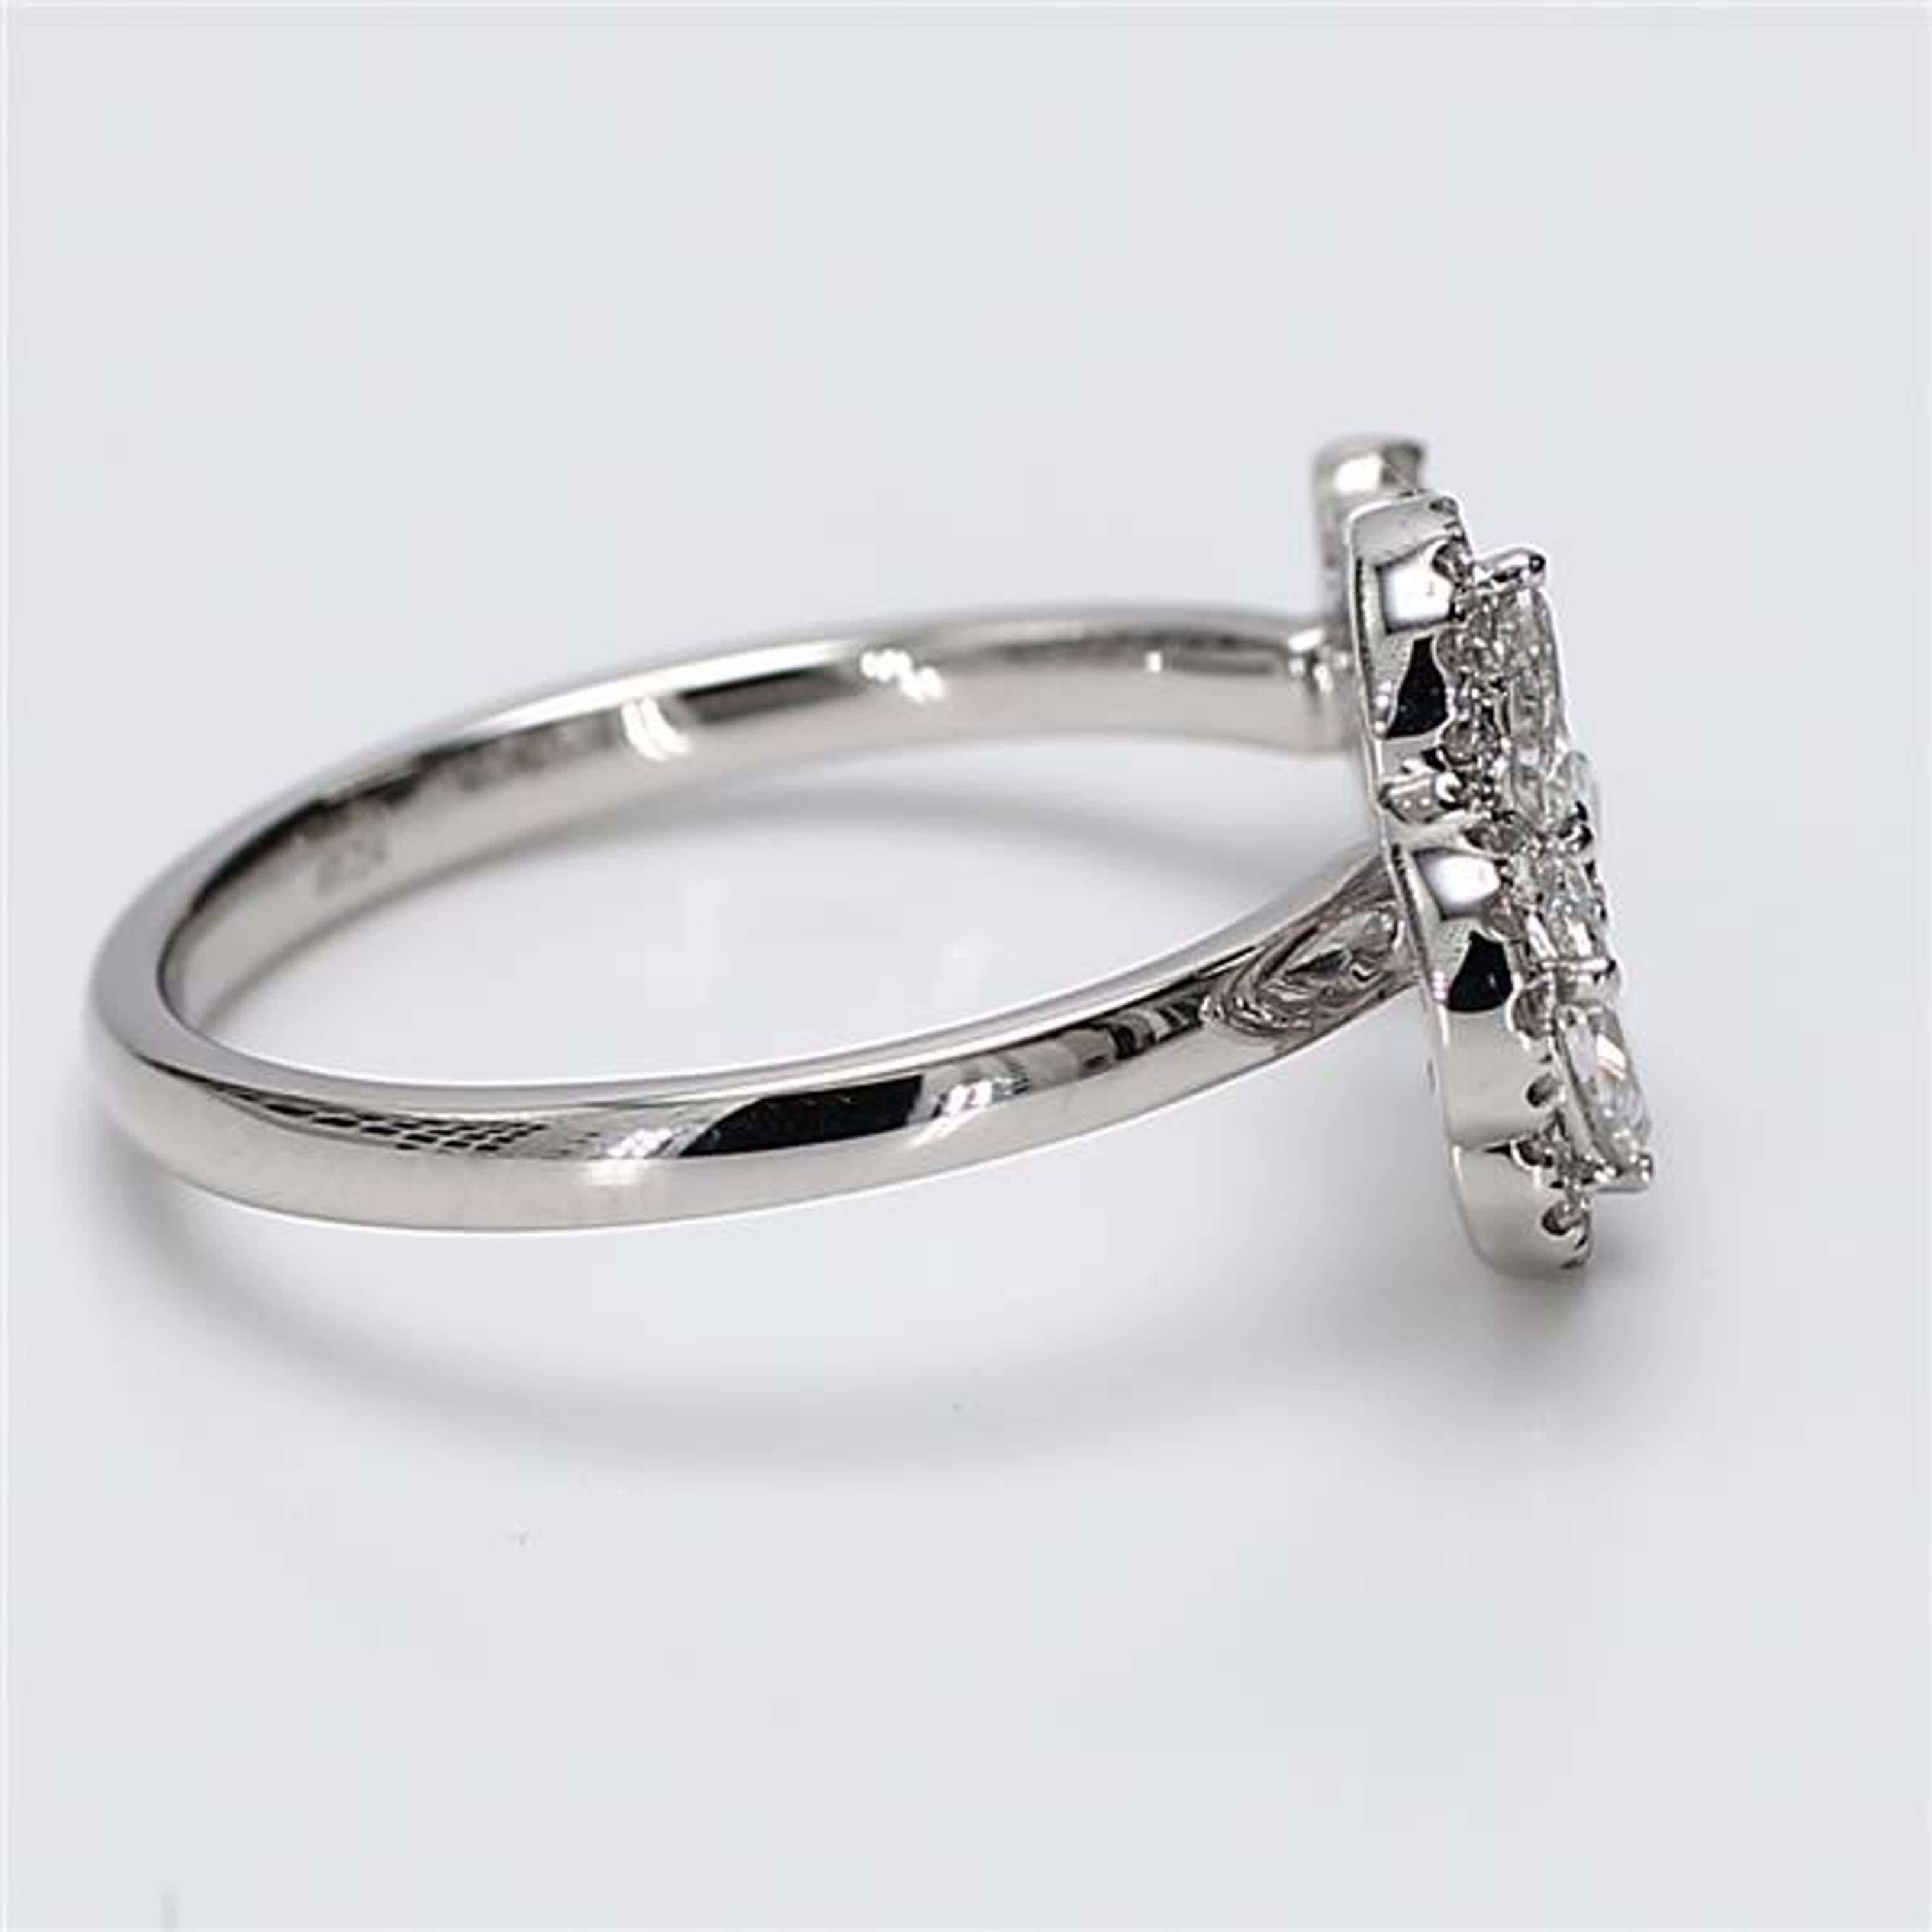 Women's Natural White Pear and Round Diamond .60 Carat TW White Gold Fashion Ring